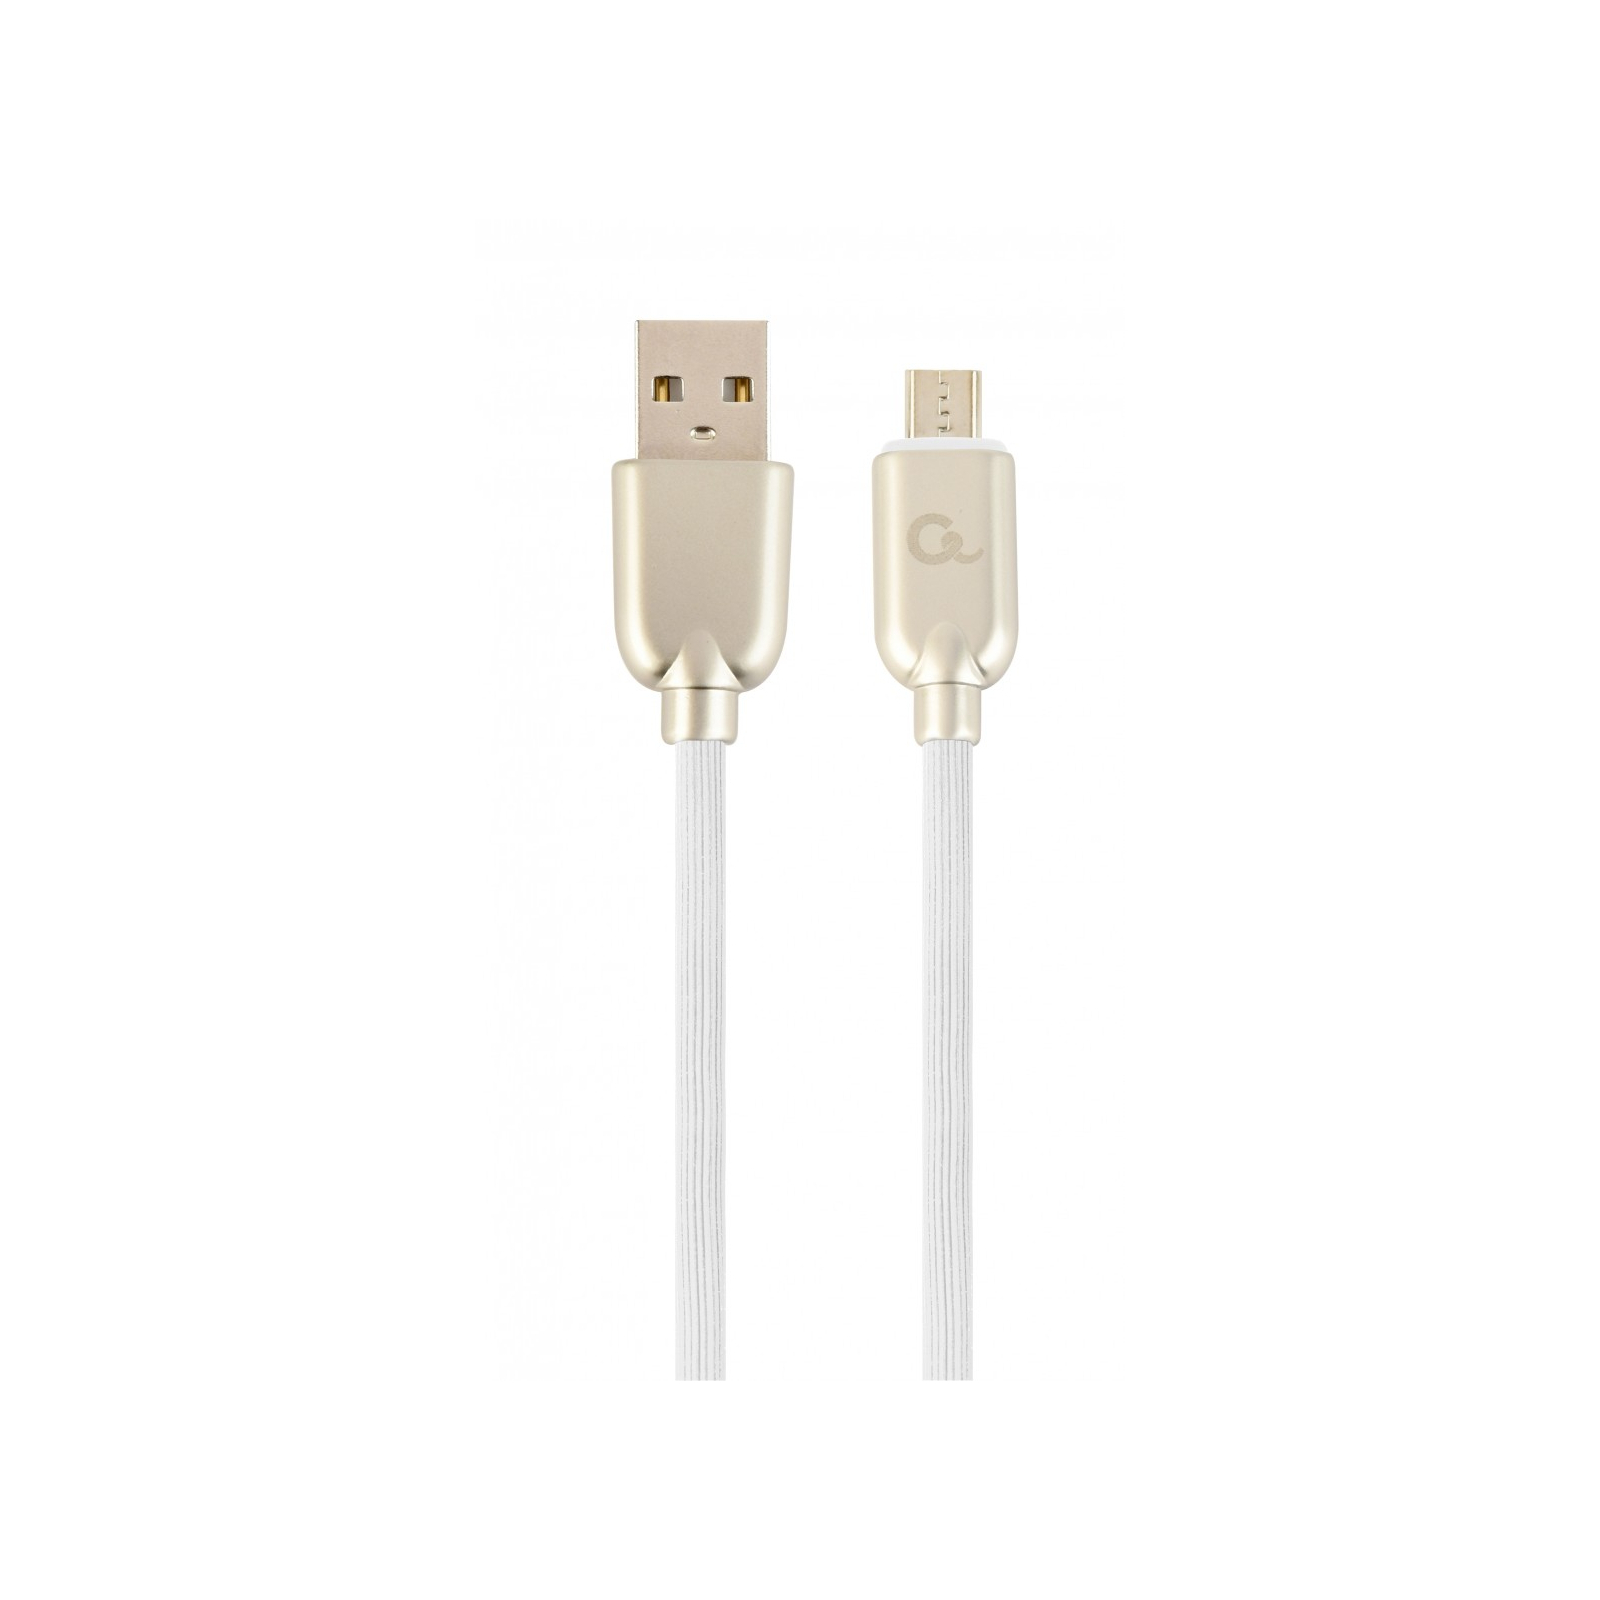 Дата кабель USB 2.0 Micro 5P to AM Cablexpert (CC-USB2R-AMmBM-1M-R)